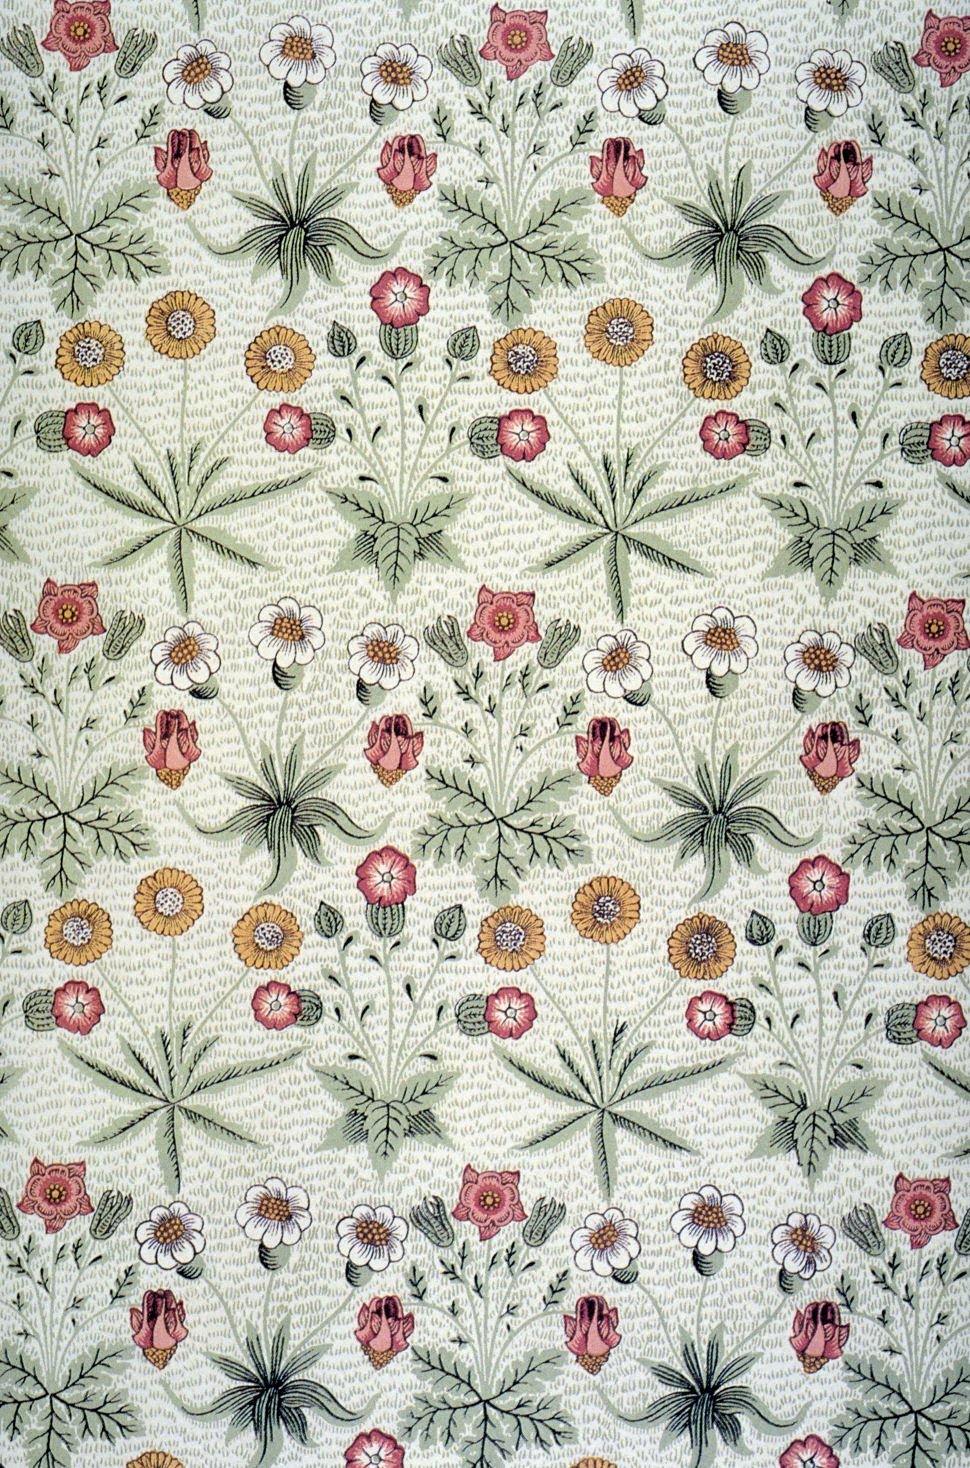 Daisy wallpaper designed by William Morris, 1864